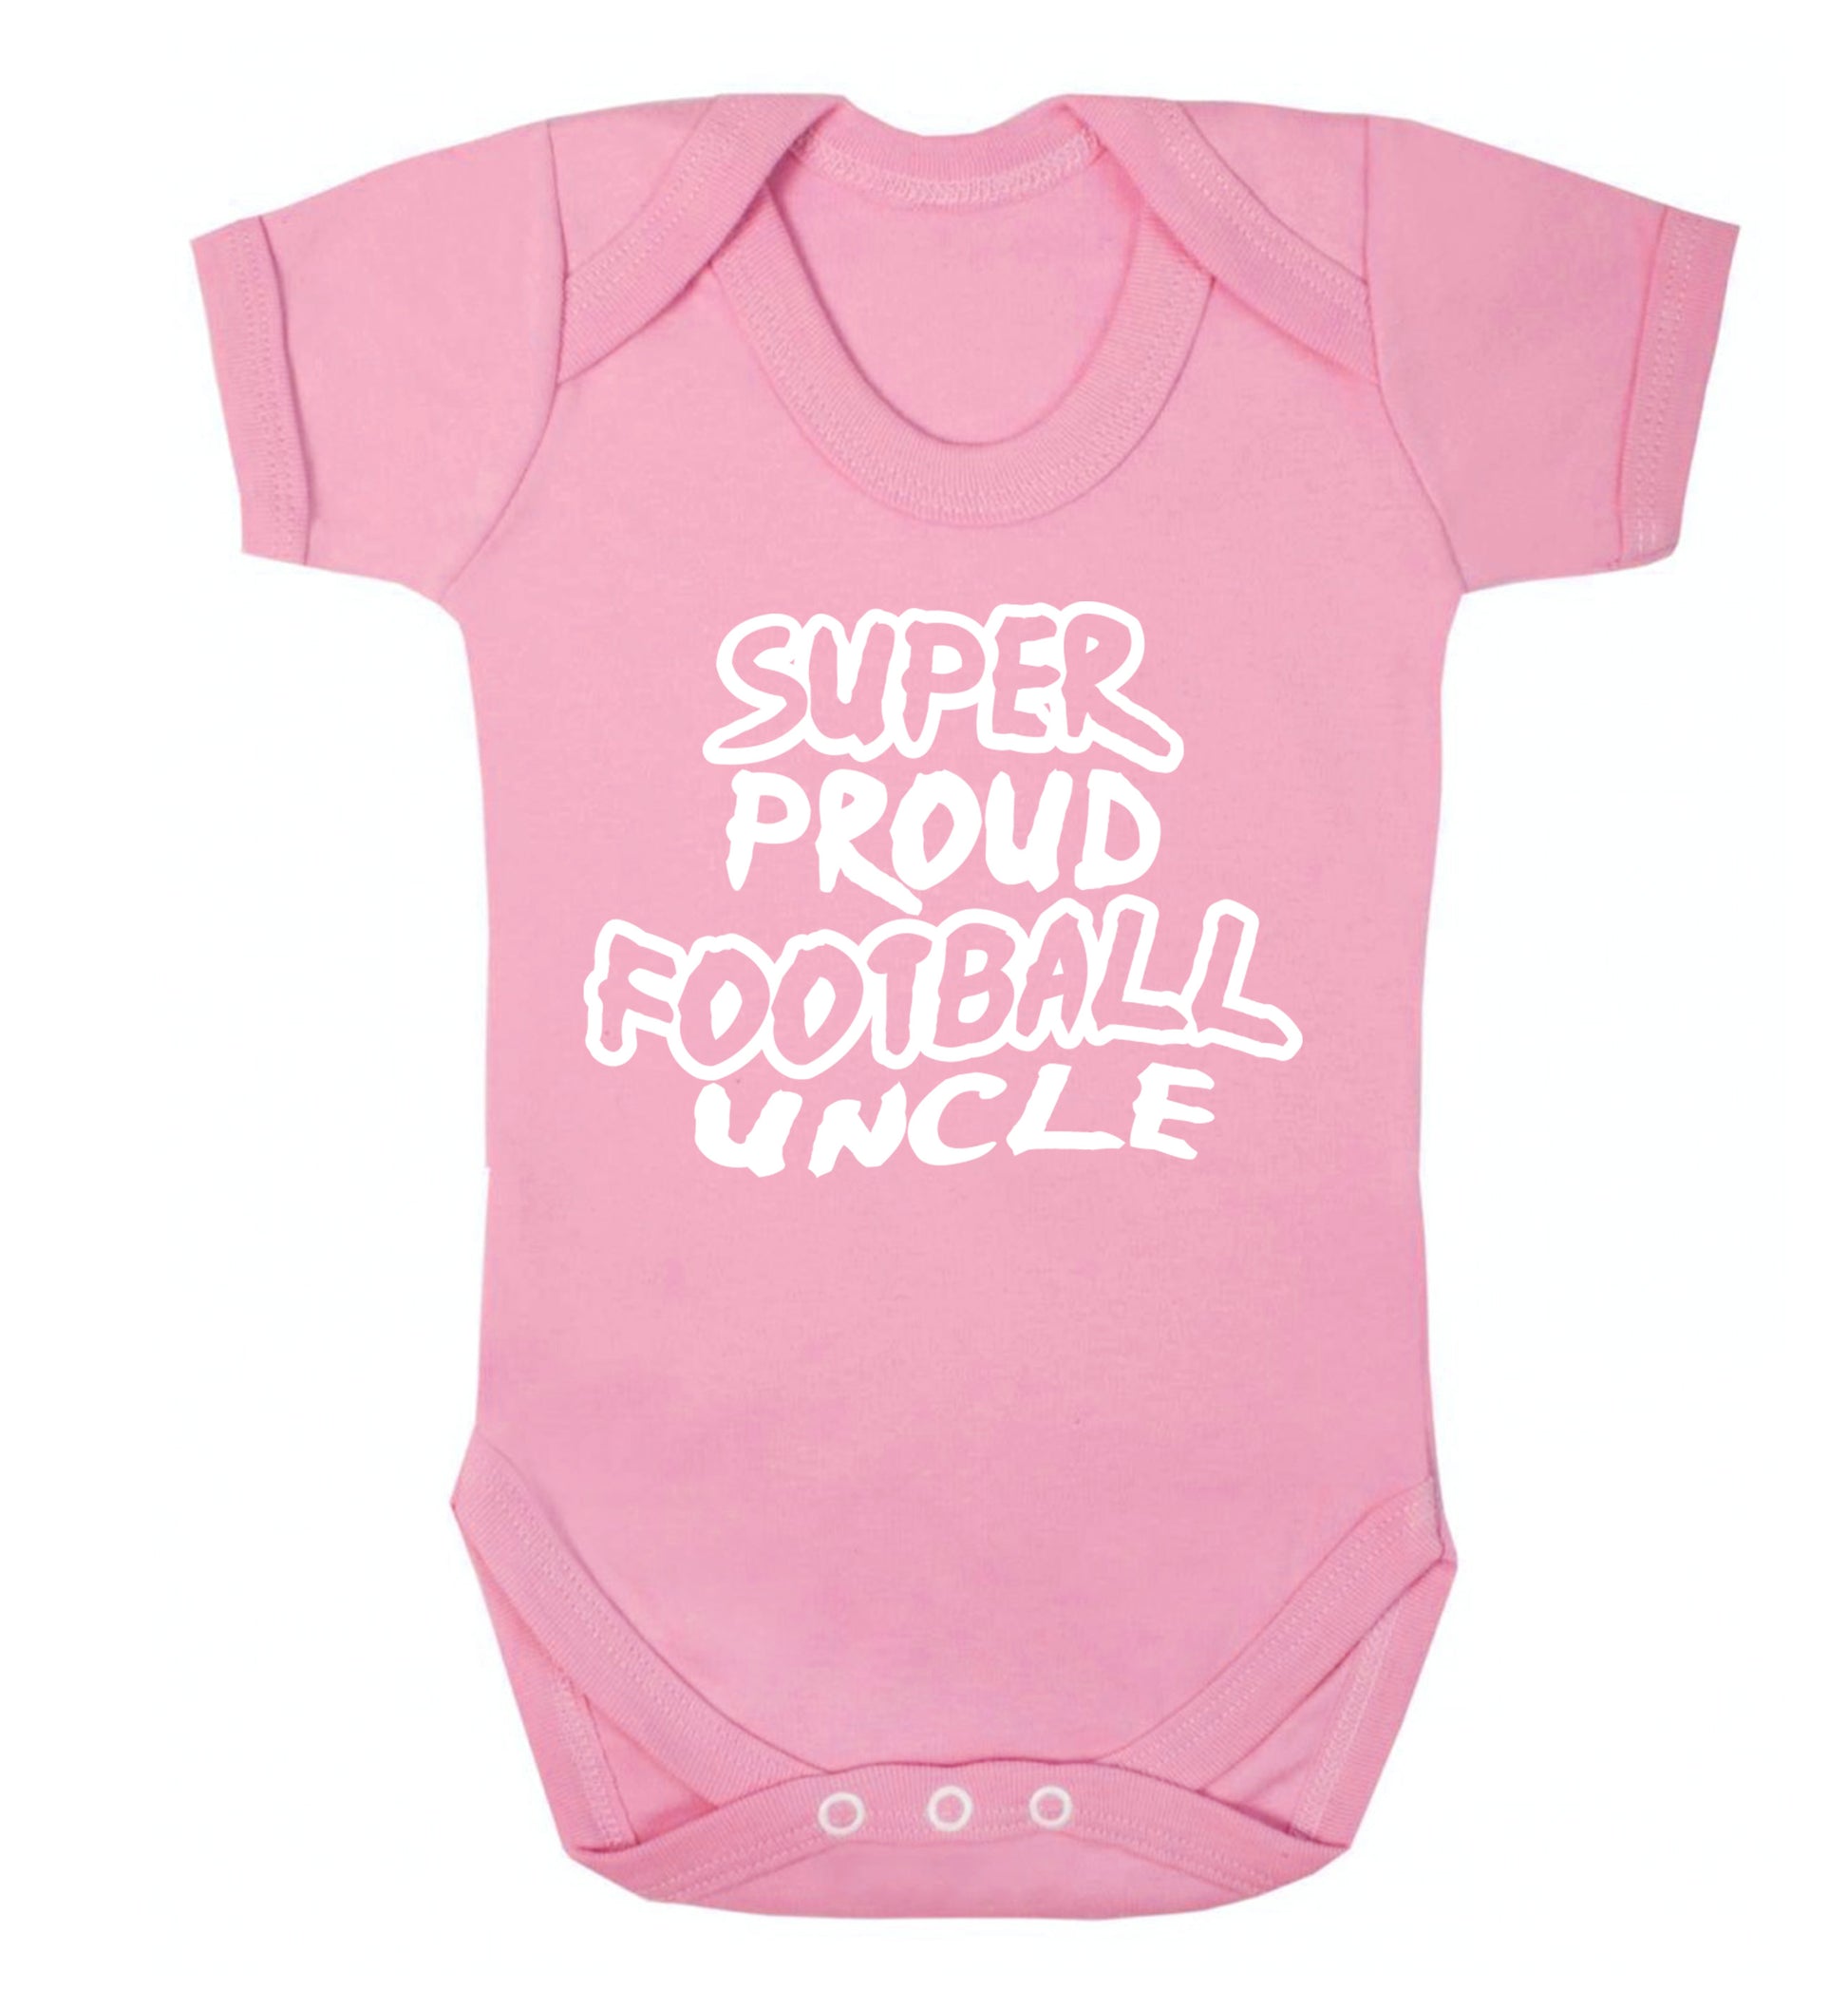 Super proud football uncle Baby Vest pale pink 18-24 months